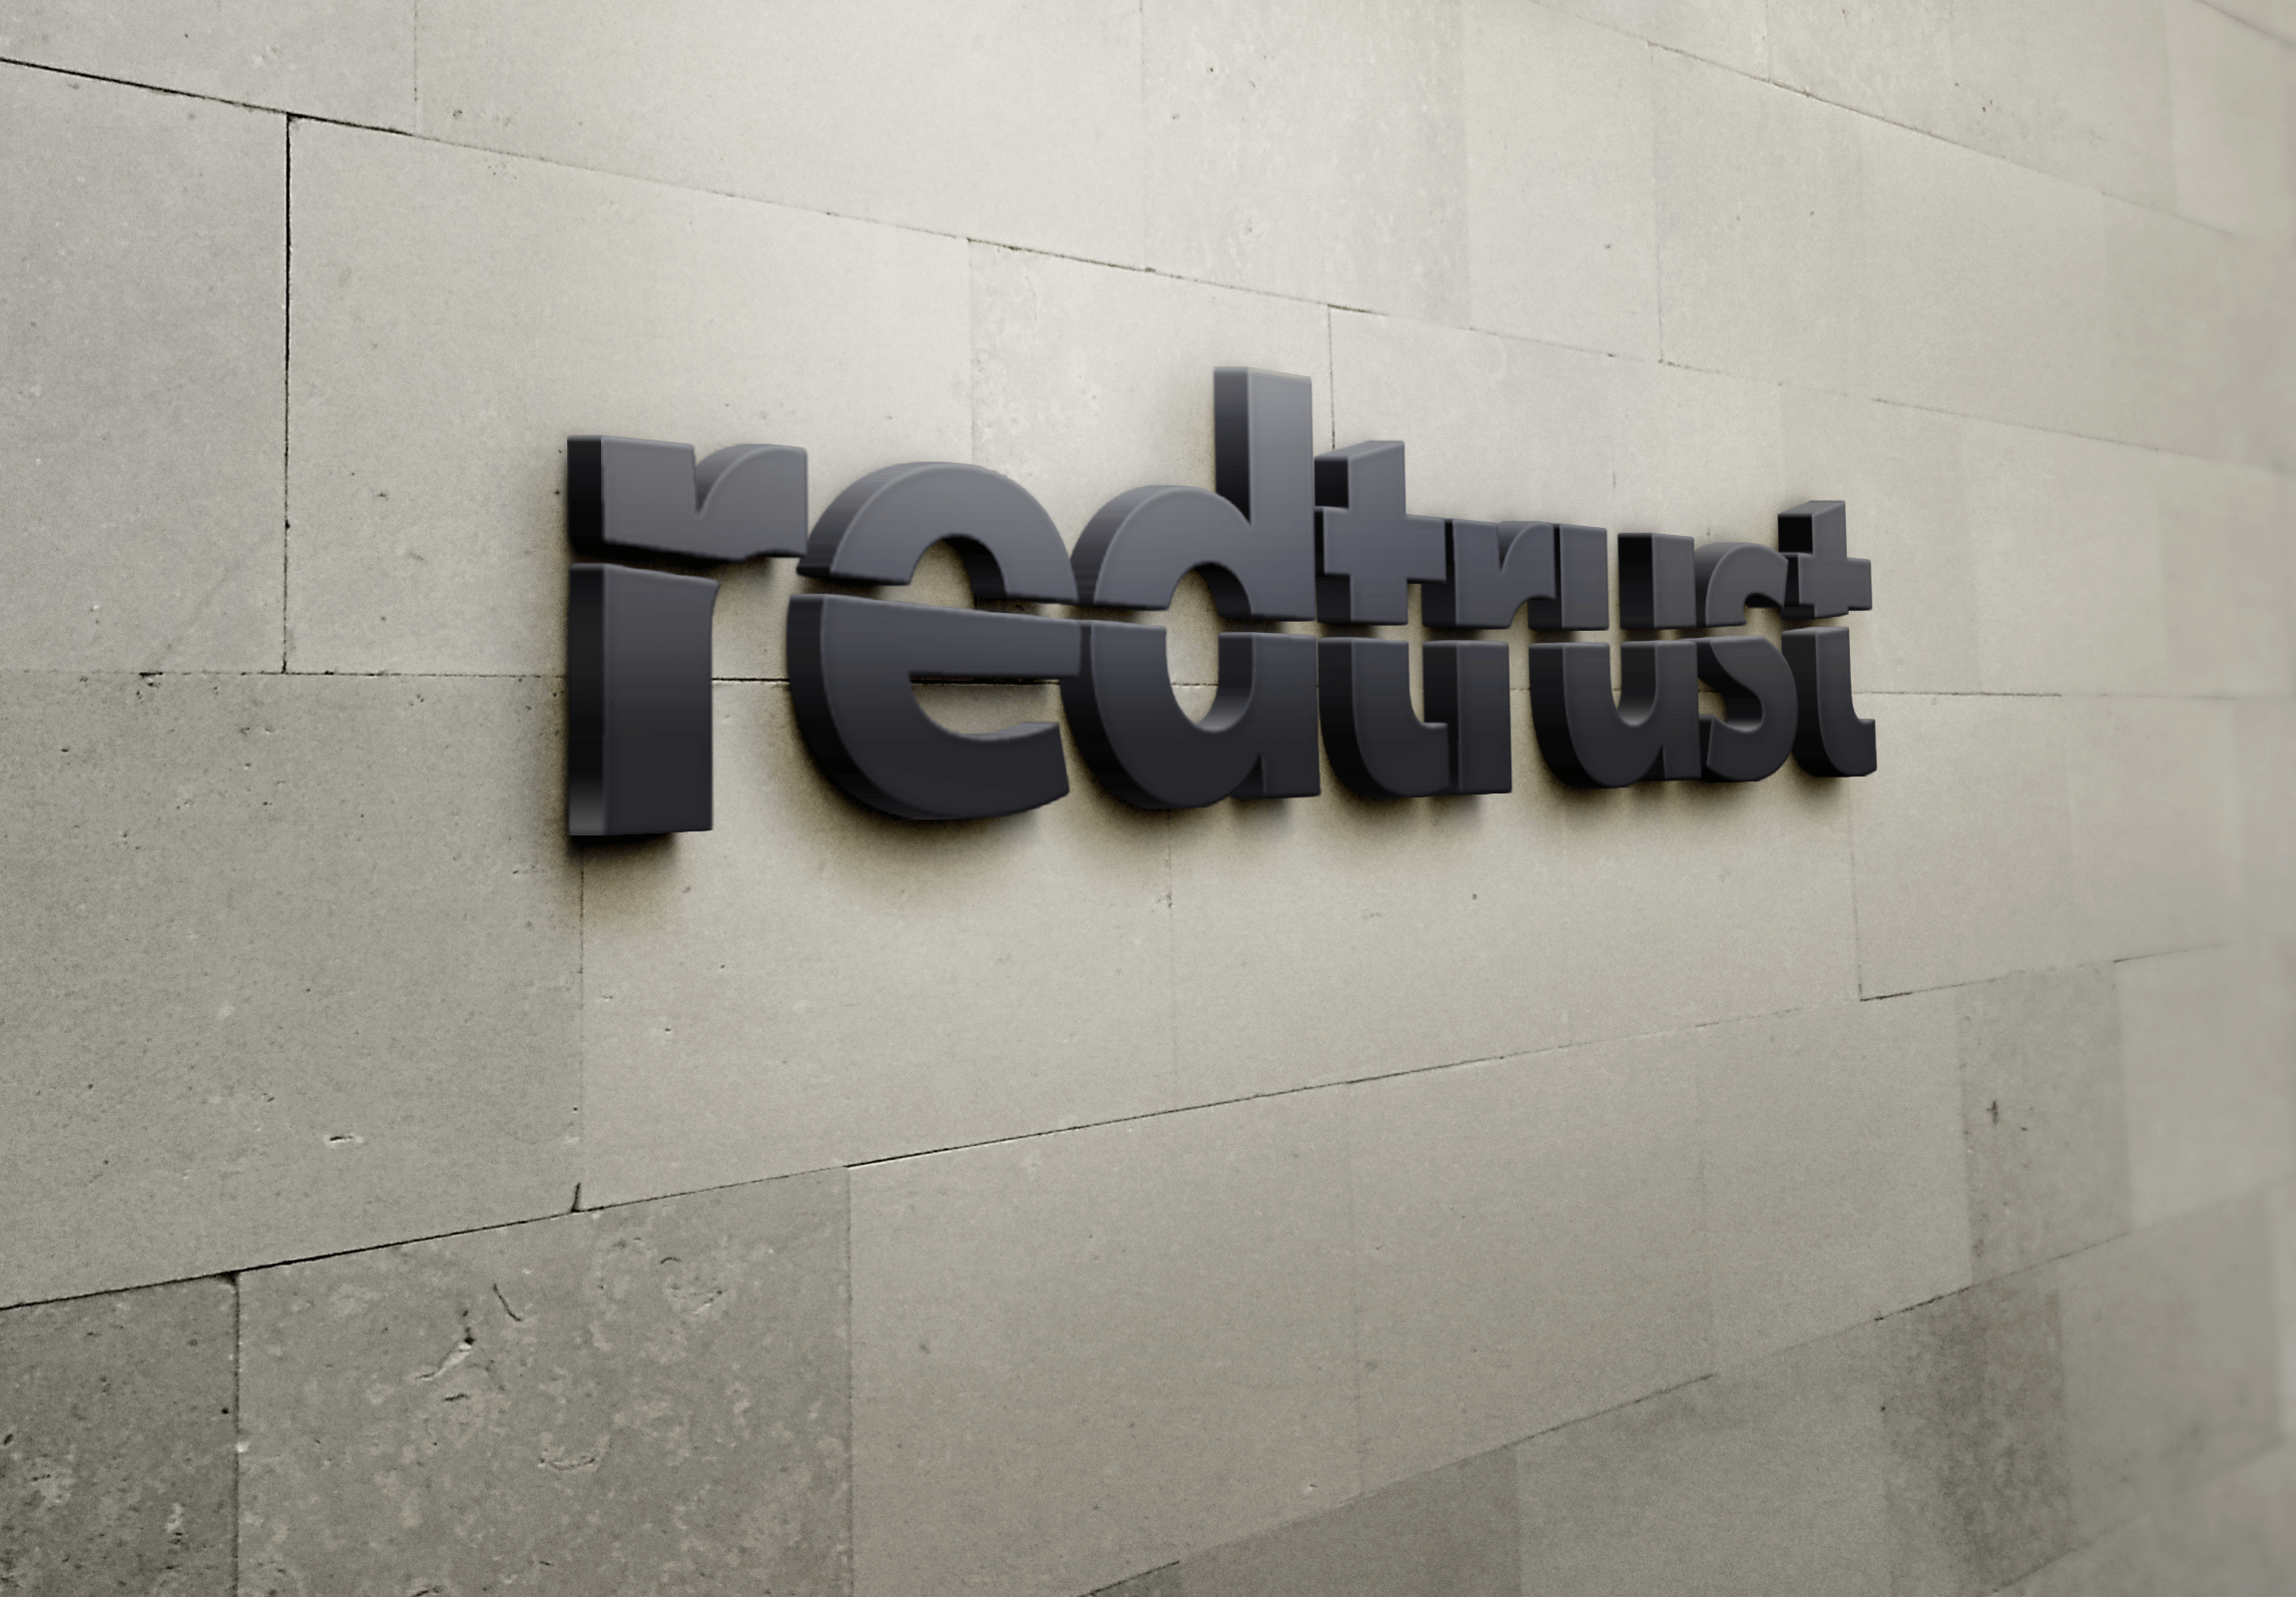 Redtrust logo